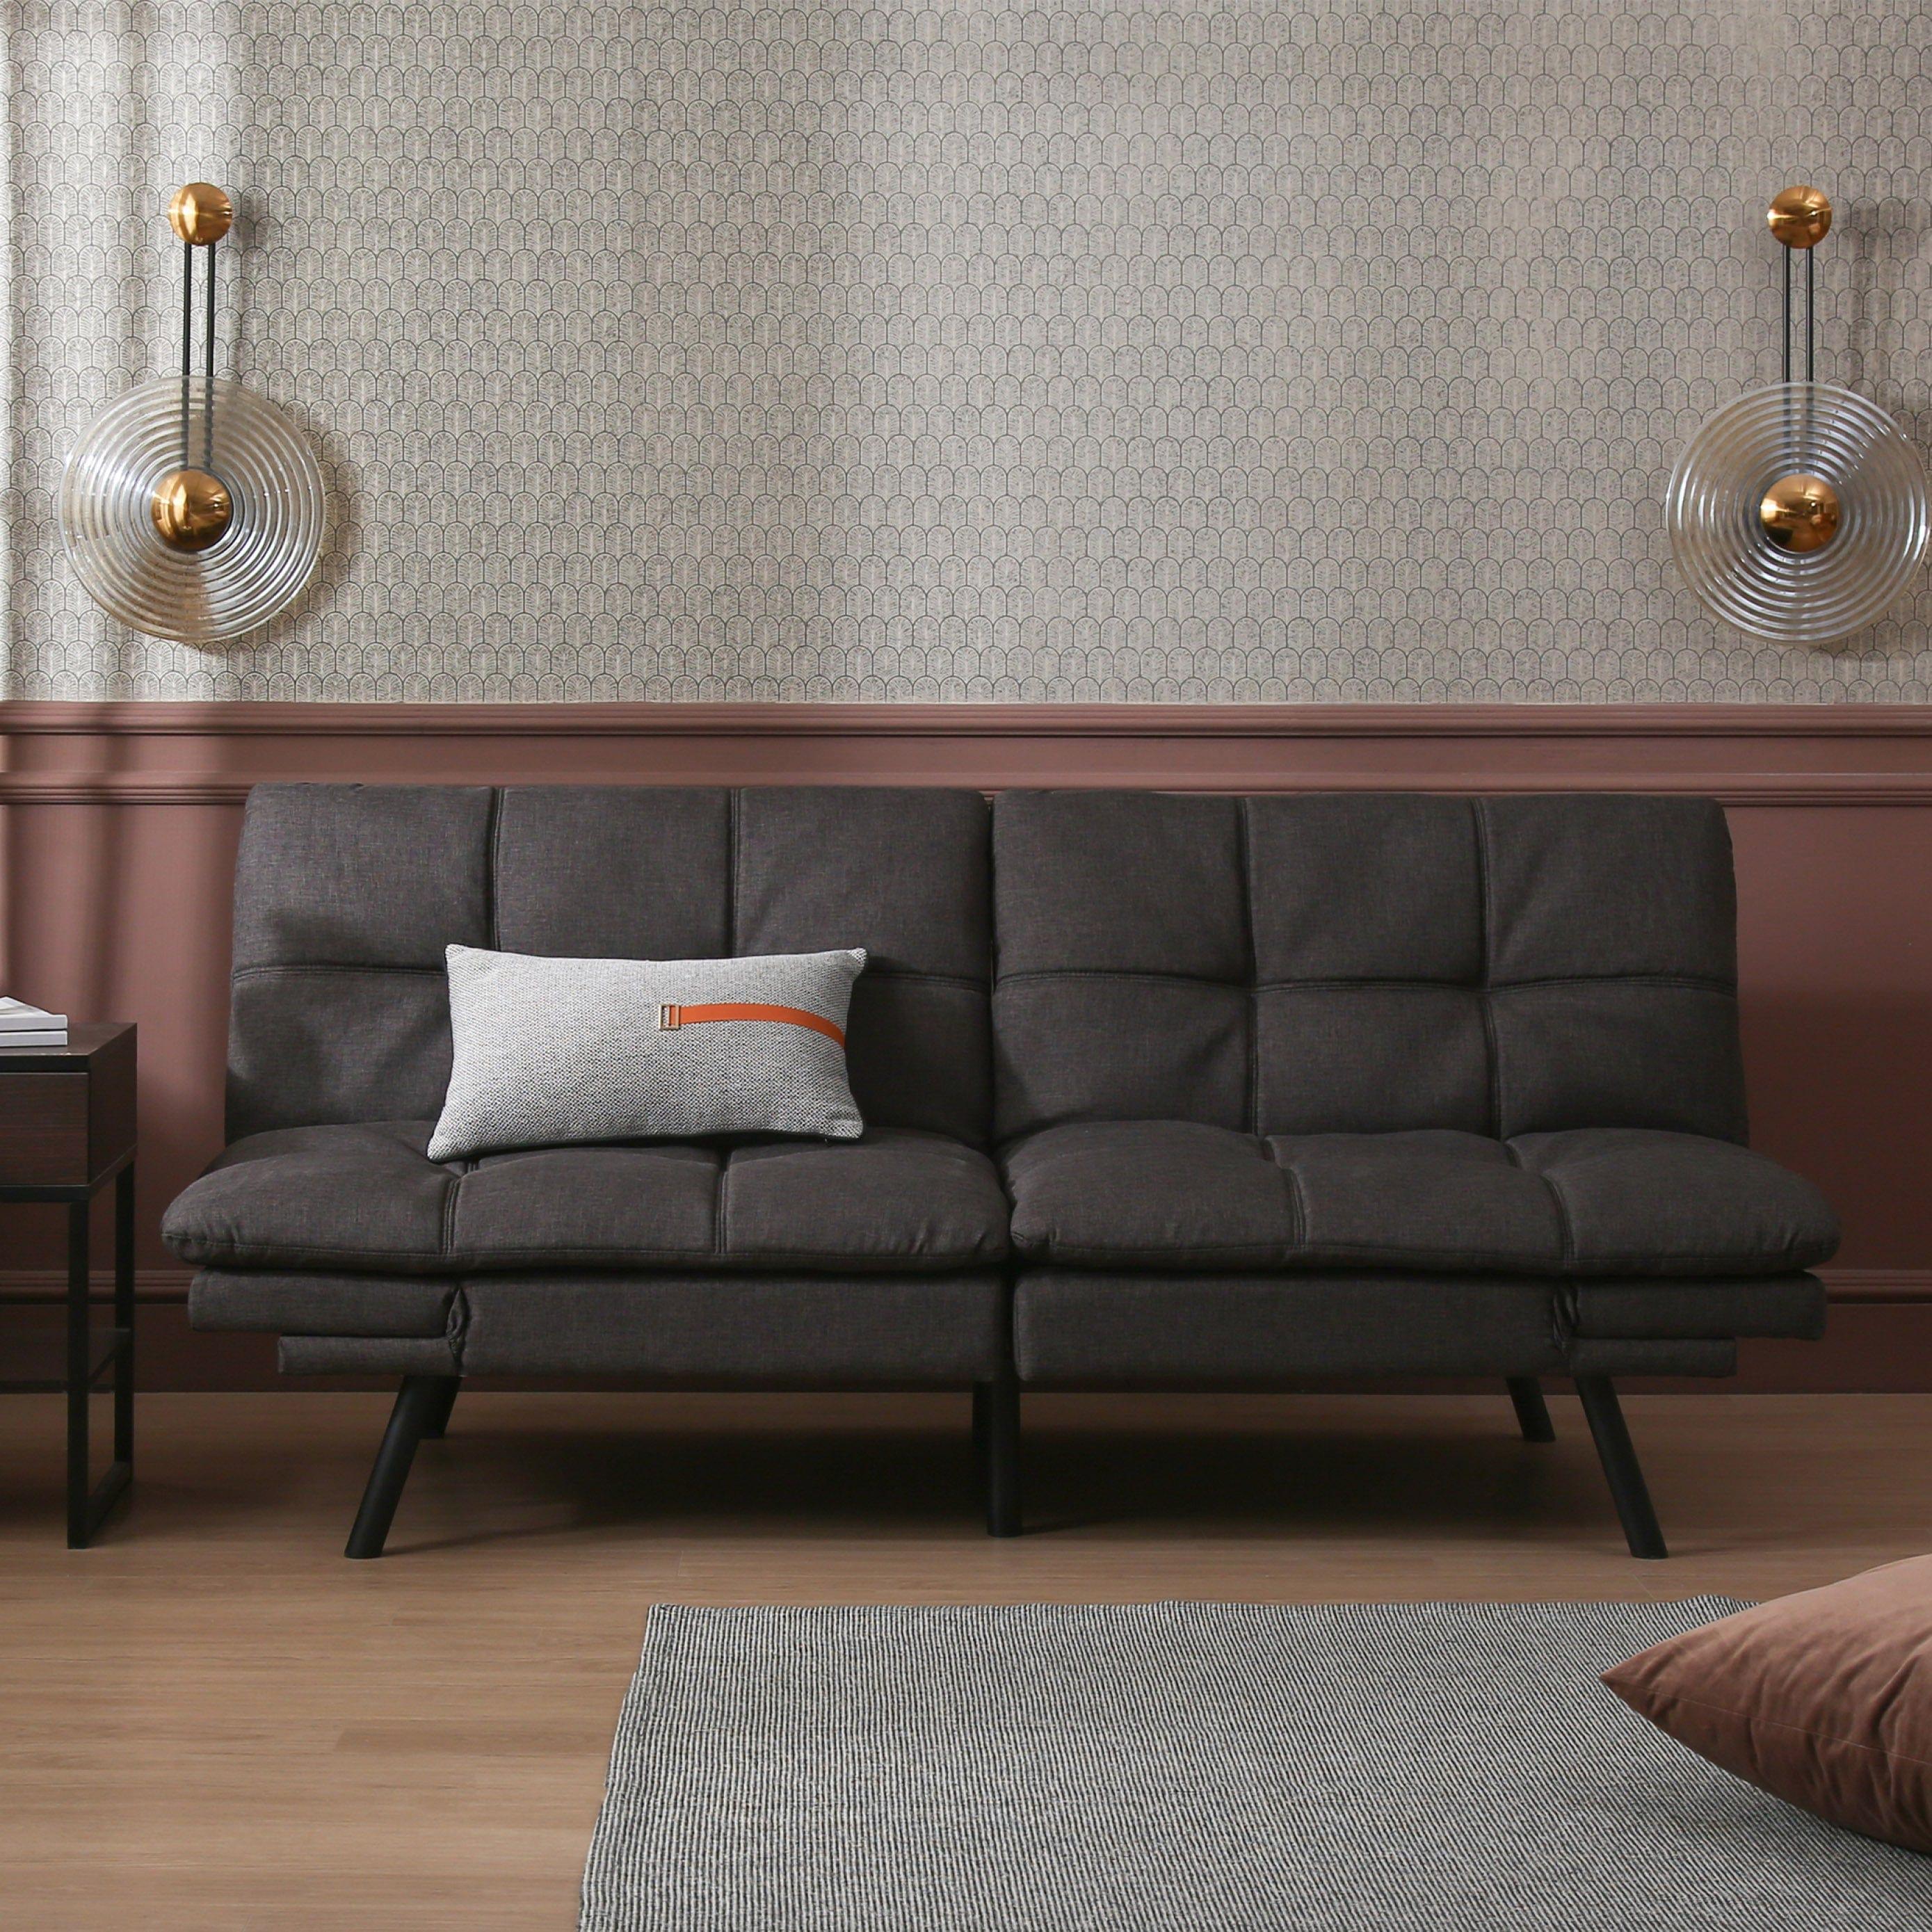 Shop Lapland Convertible Memory Foam Futon Couch Sofa Bed Mademoiselle Home Decor